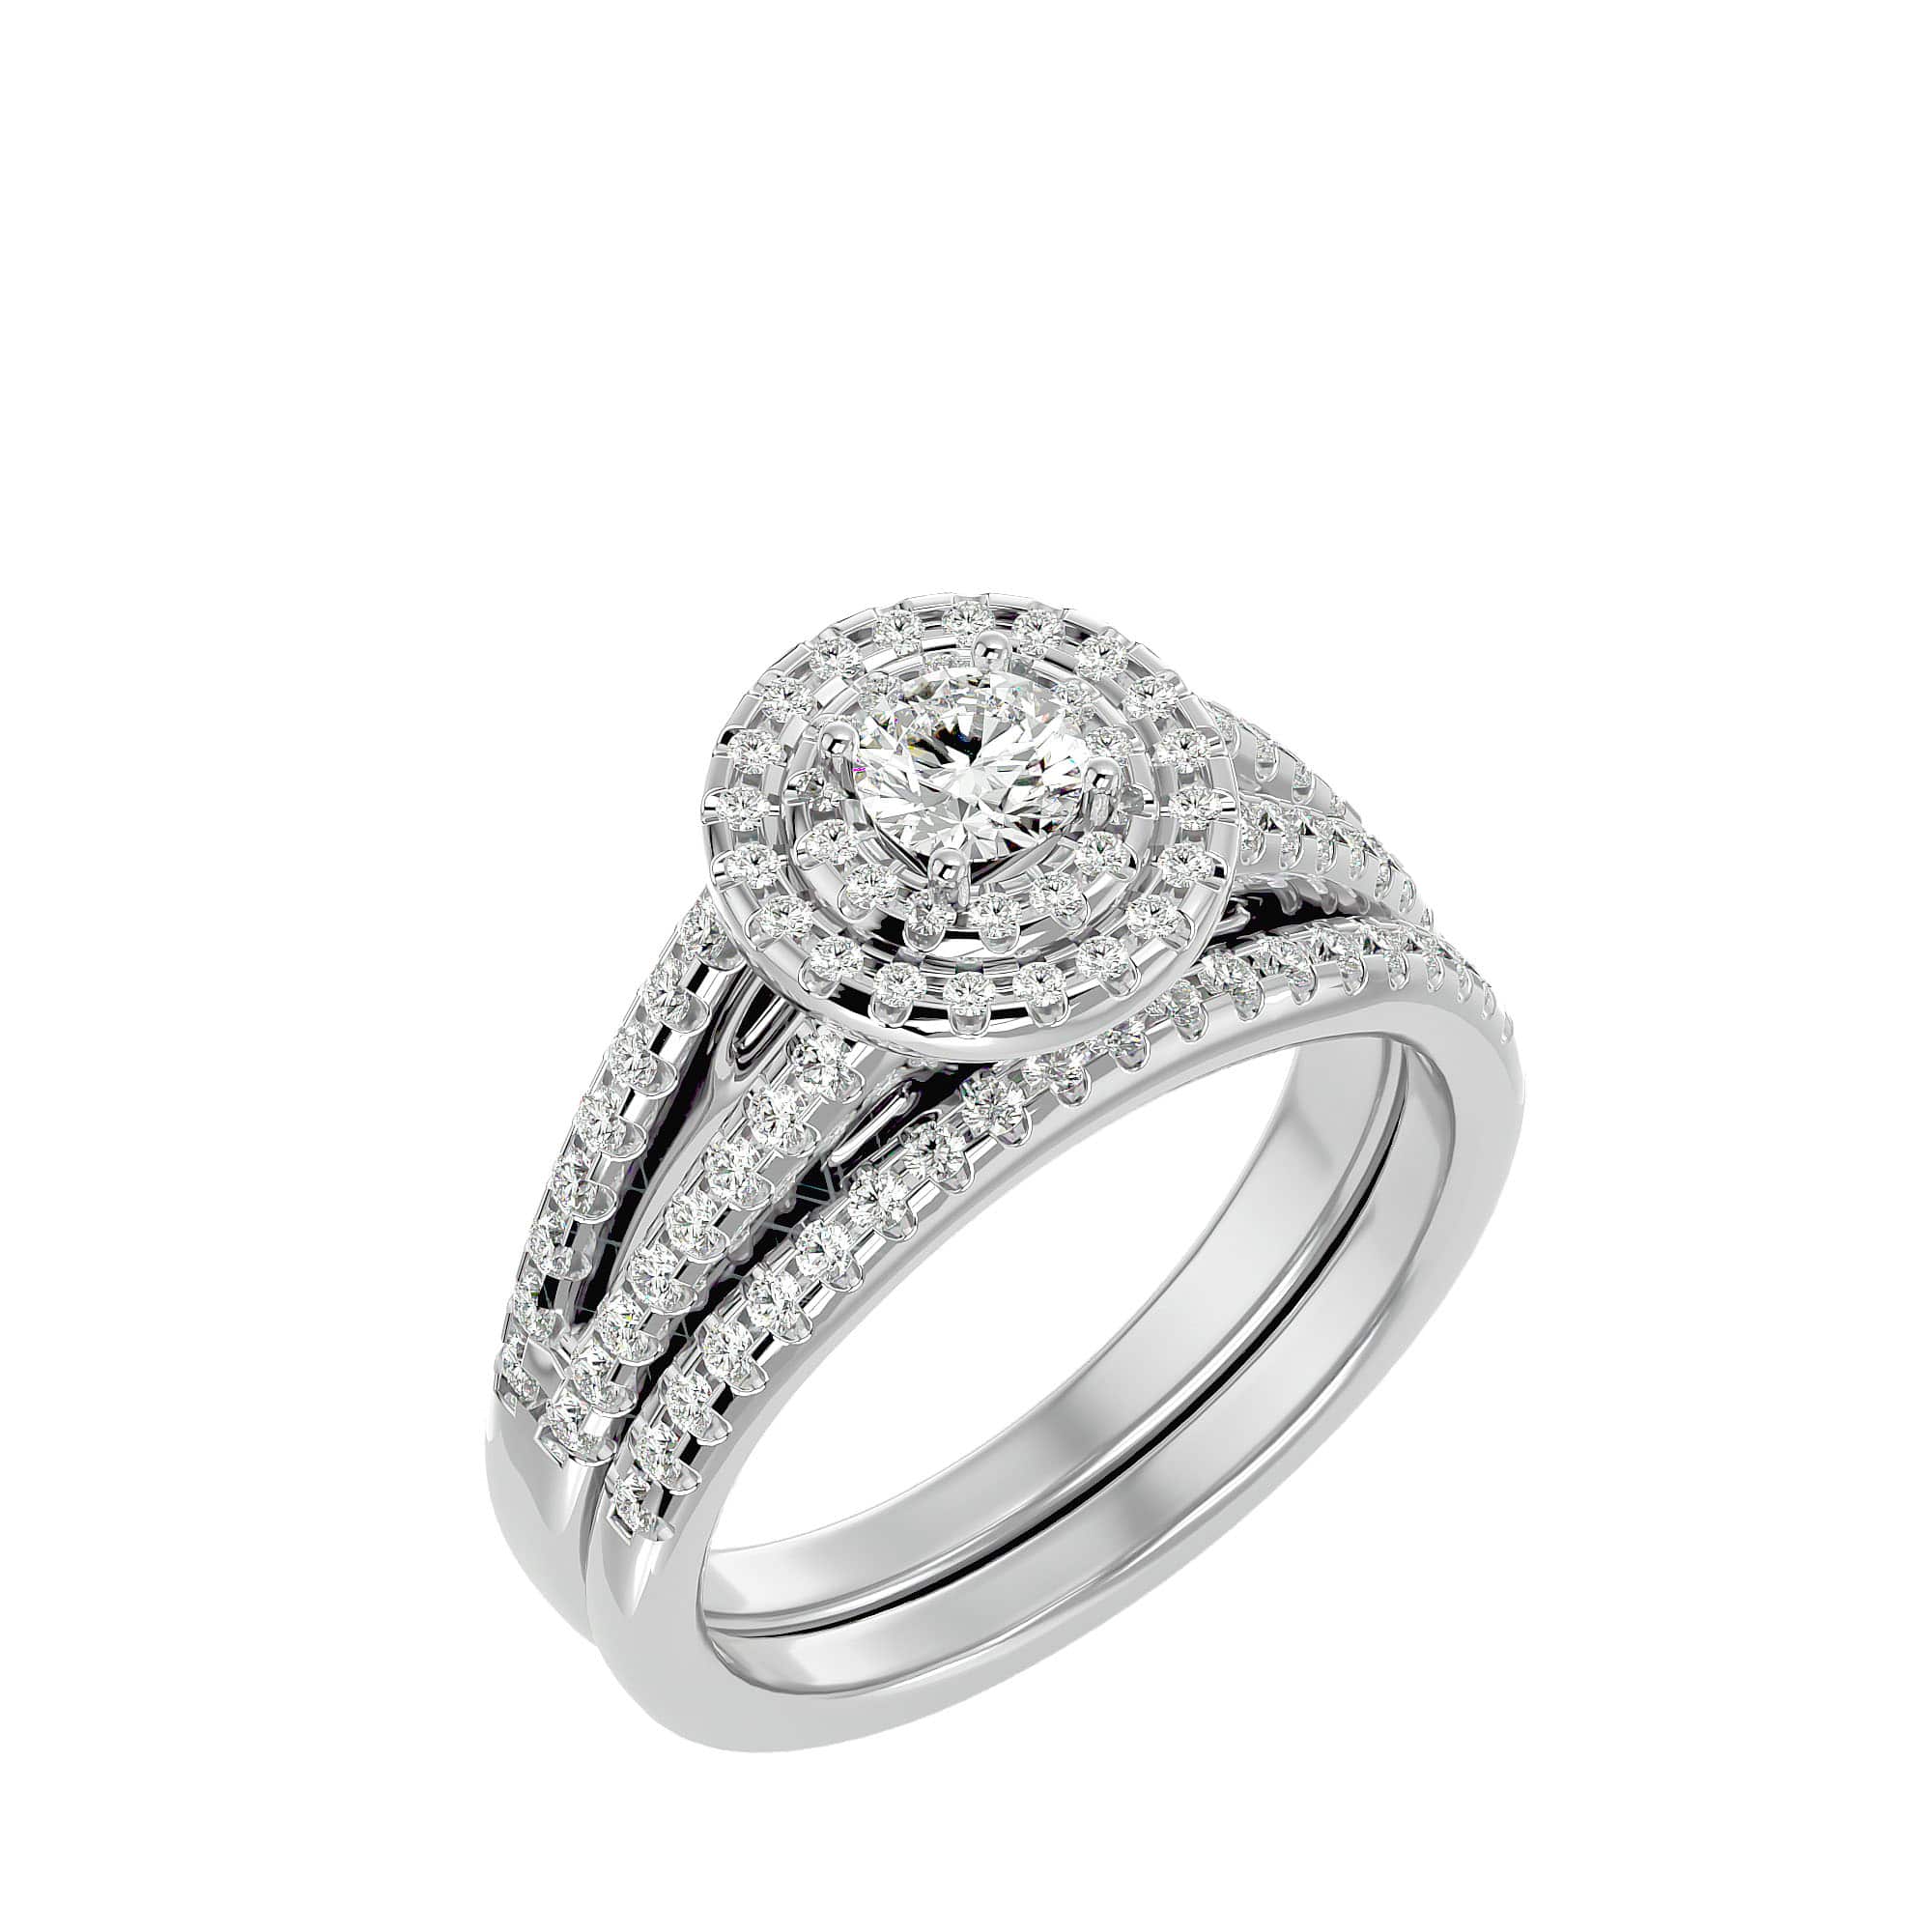 Double Halo Split-Shank Engagement Ring with Matching Wedding Band Set